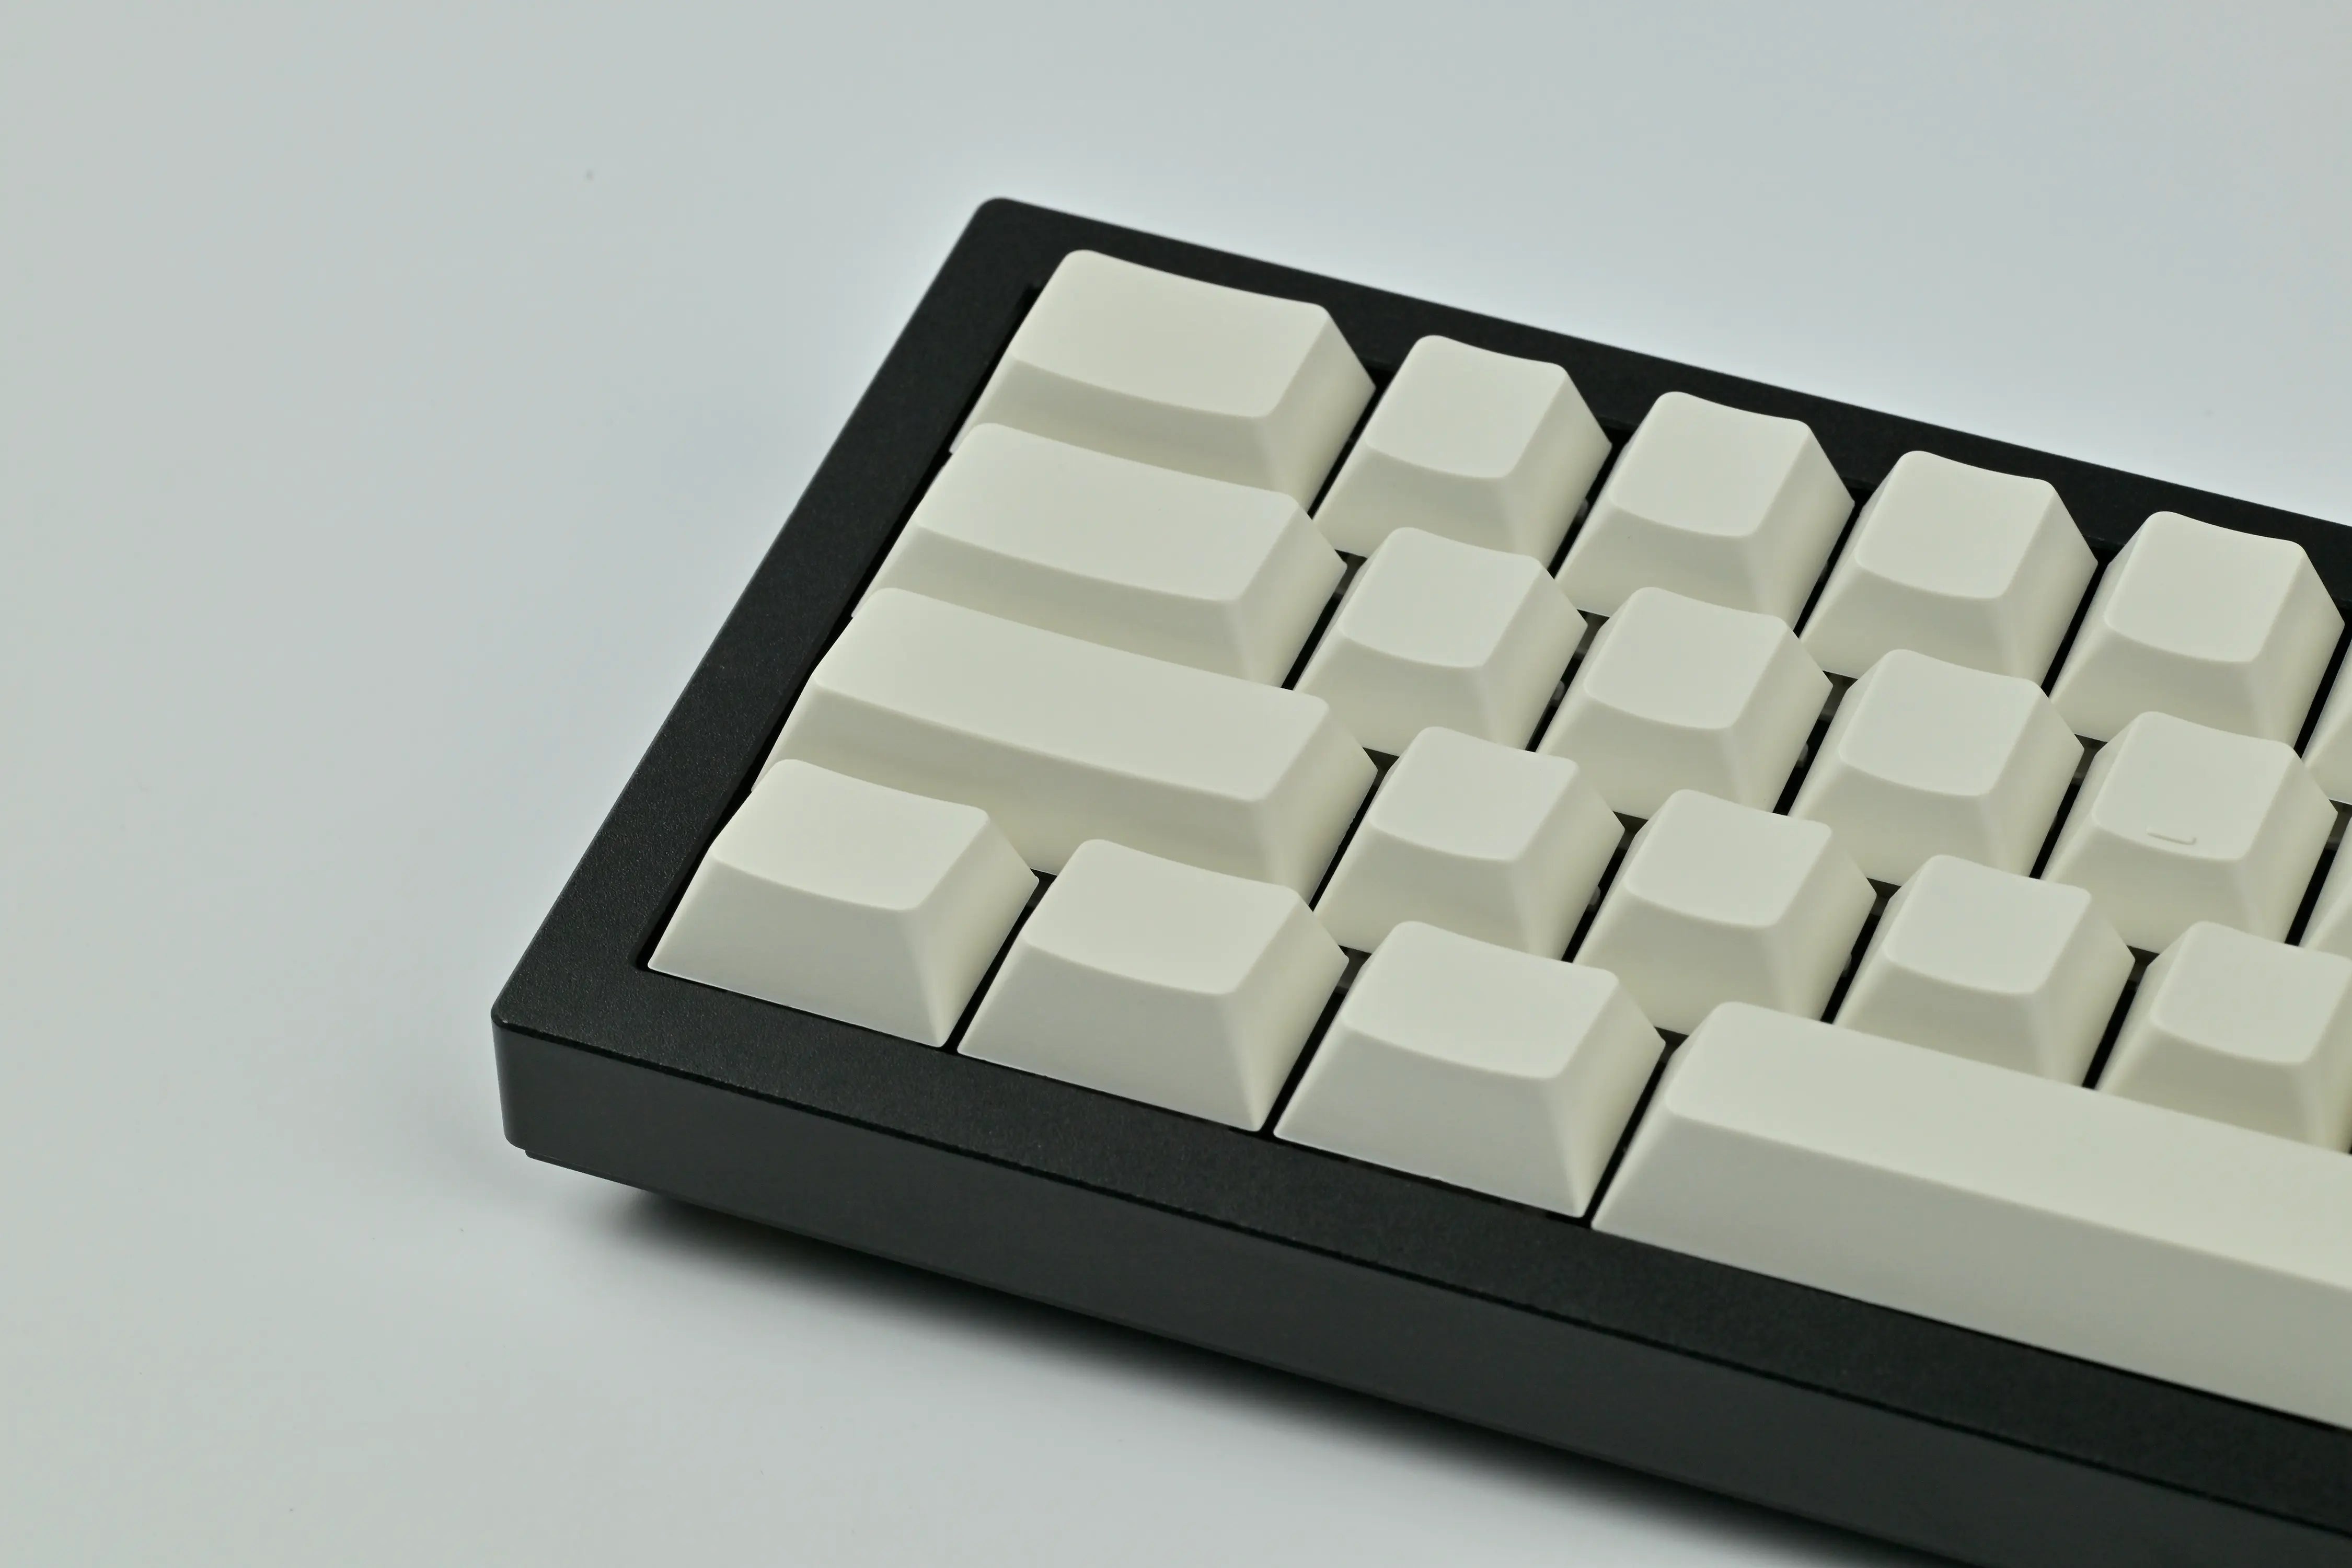 Keyreative ABS Cherry Profile Classic Light Grey Blank Keycaps